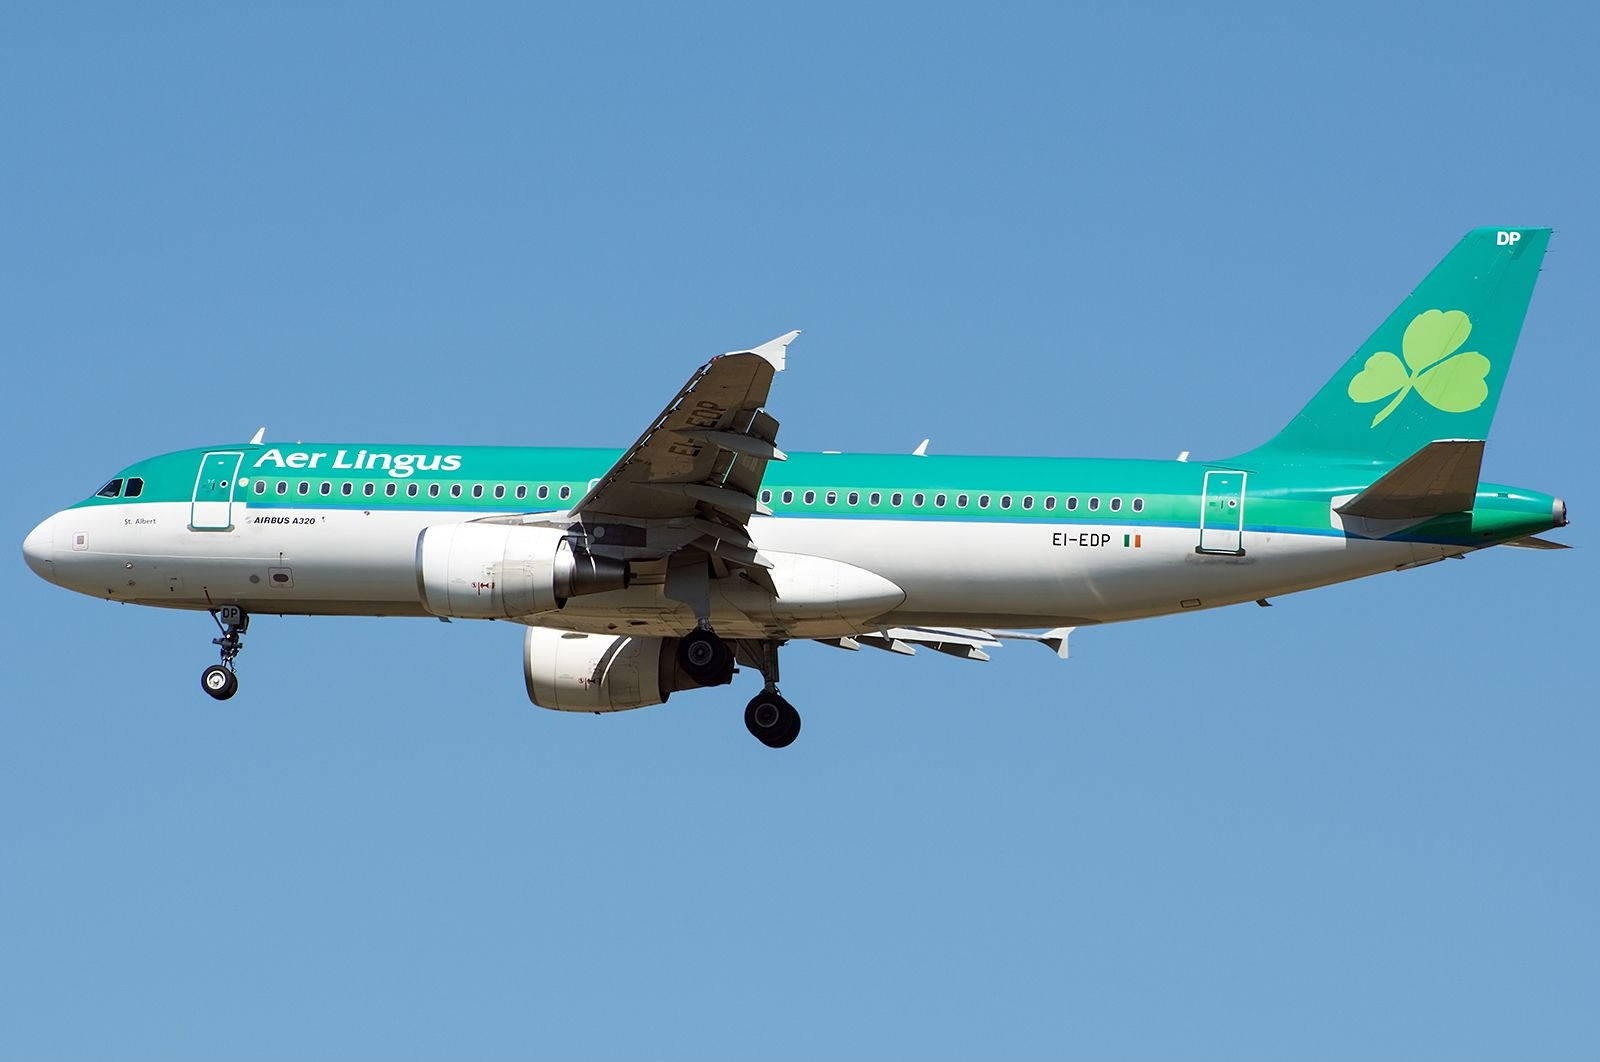 Winging Of Aer Lingus Airplane Wallpaper